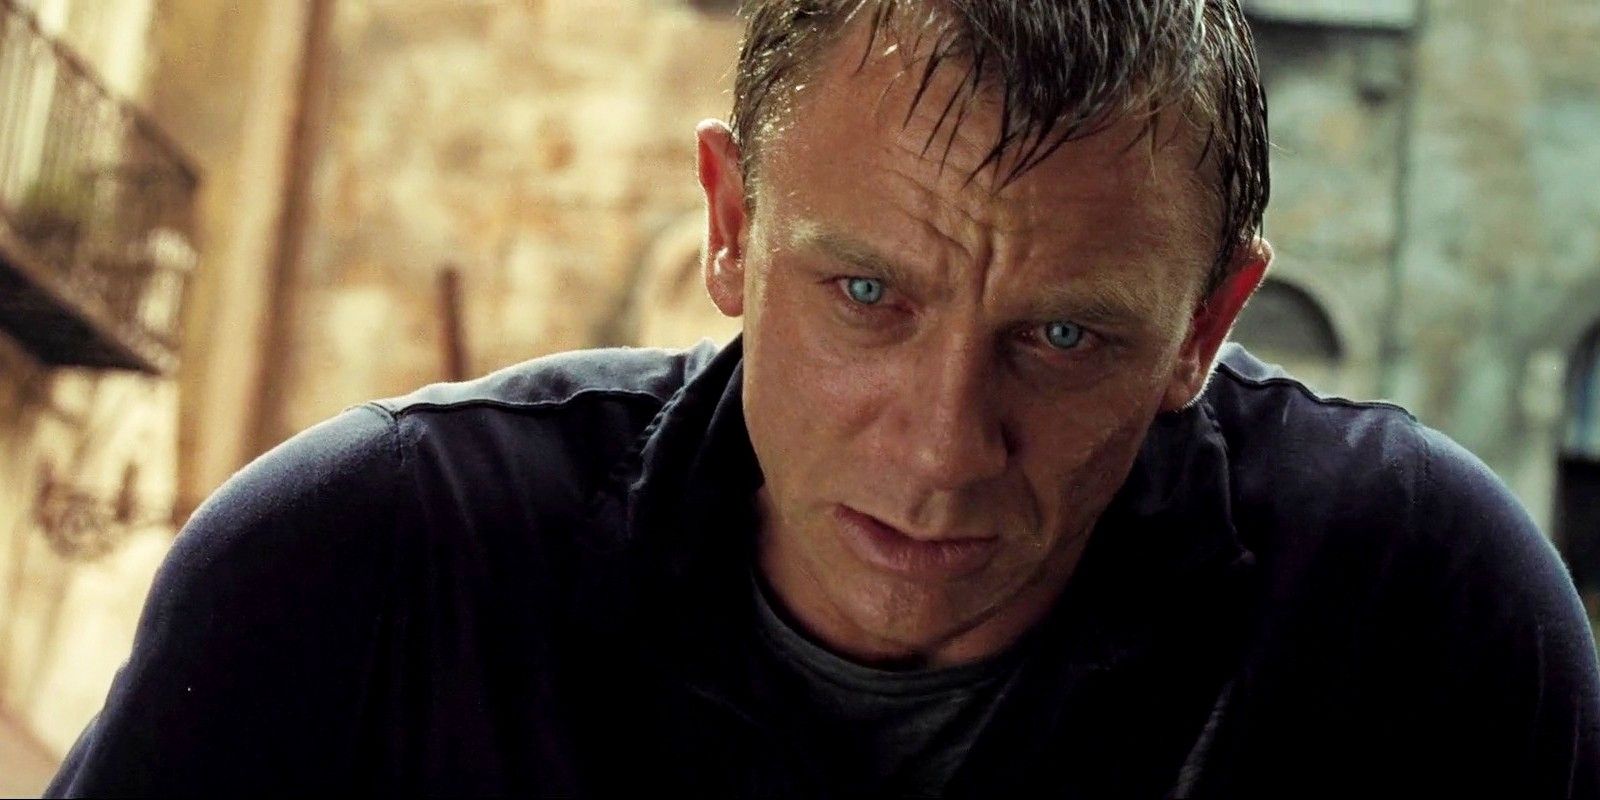 Daniel-Craig-as-Bond-in-Casino-Royale-2006-1.jpg